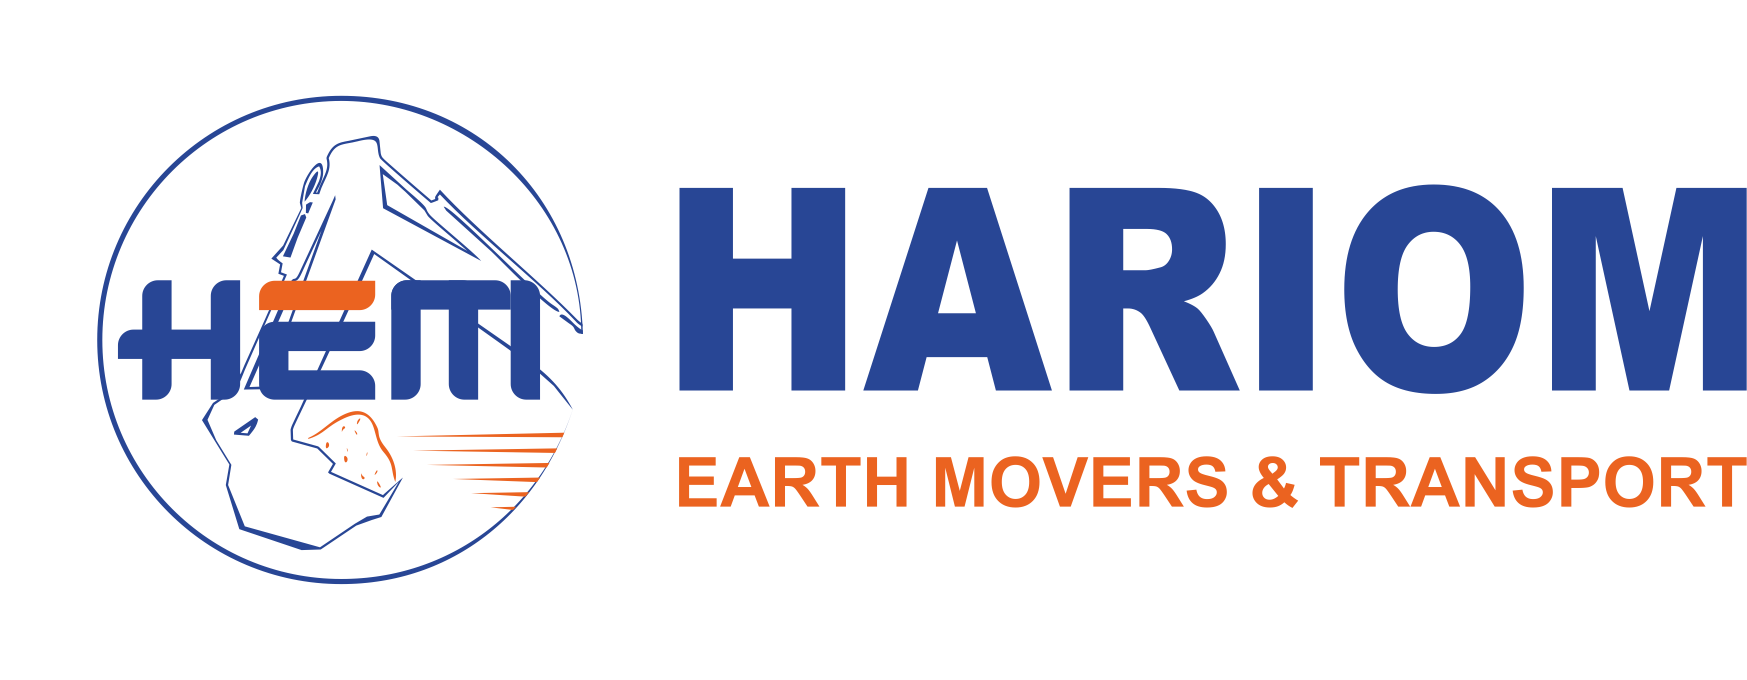 HARIOM Earthmovers & Transport